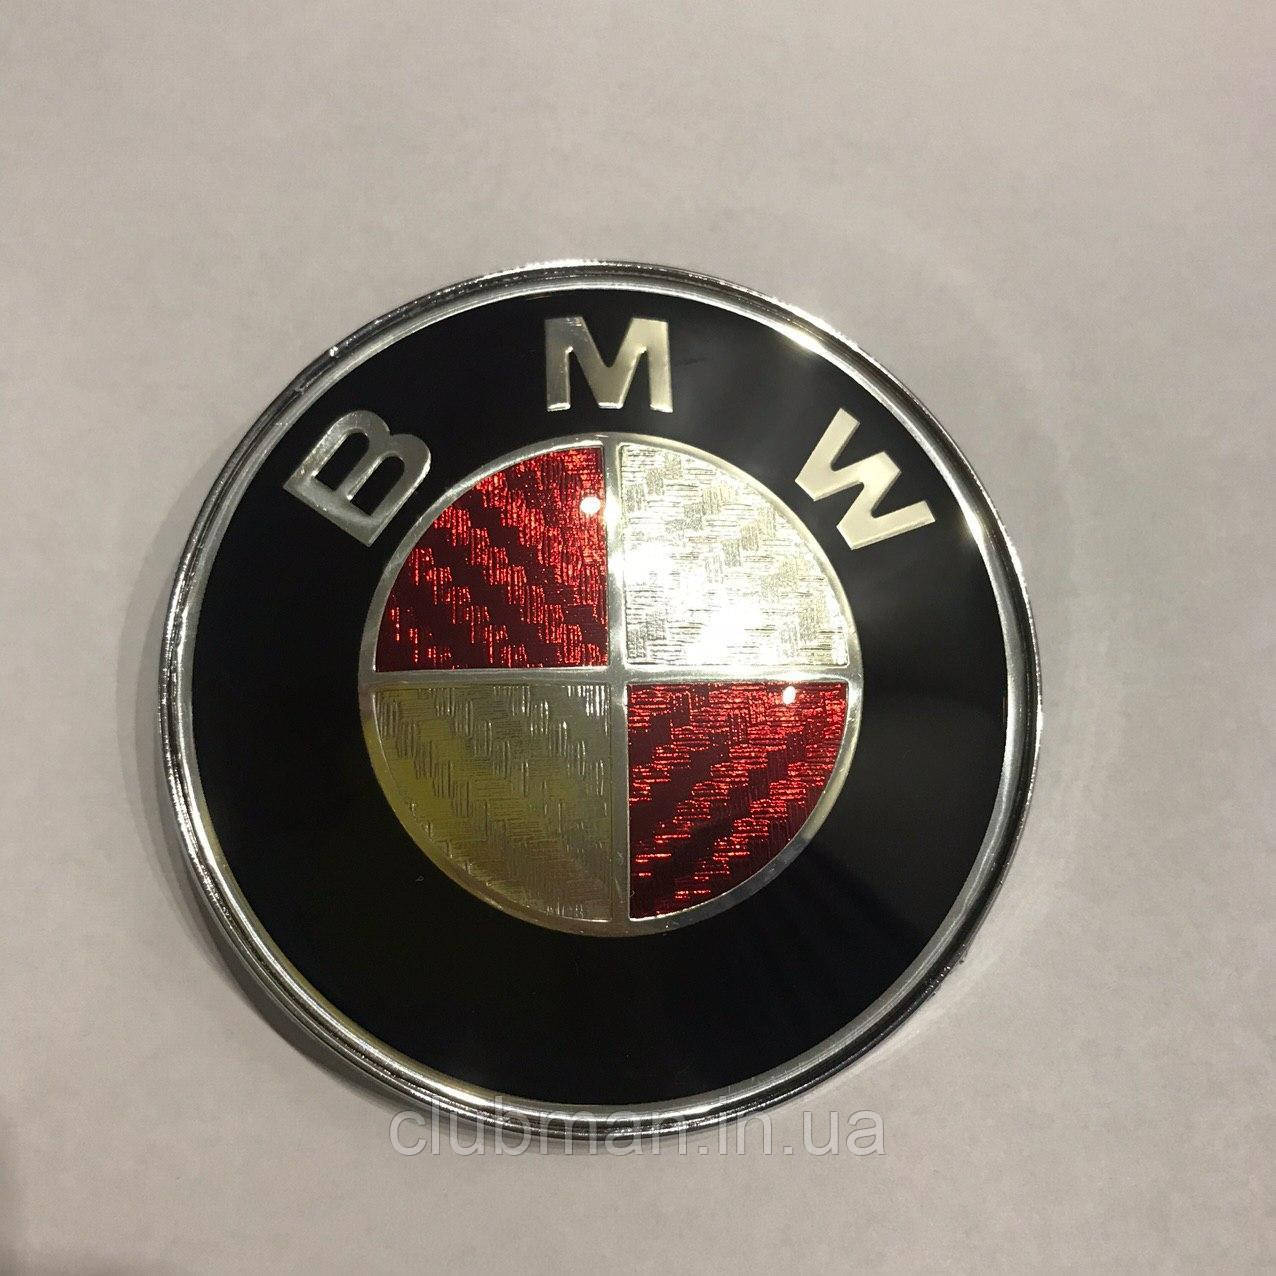 Юбилейный значок бмв. Значок на багажник BMW e30. BMW e70 красный значок service. BMW С красным значком. БМВ значок на красной машине.